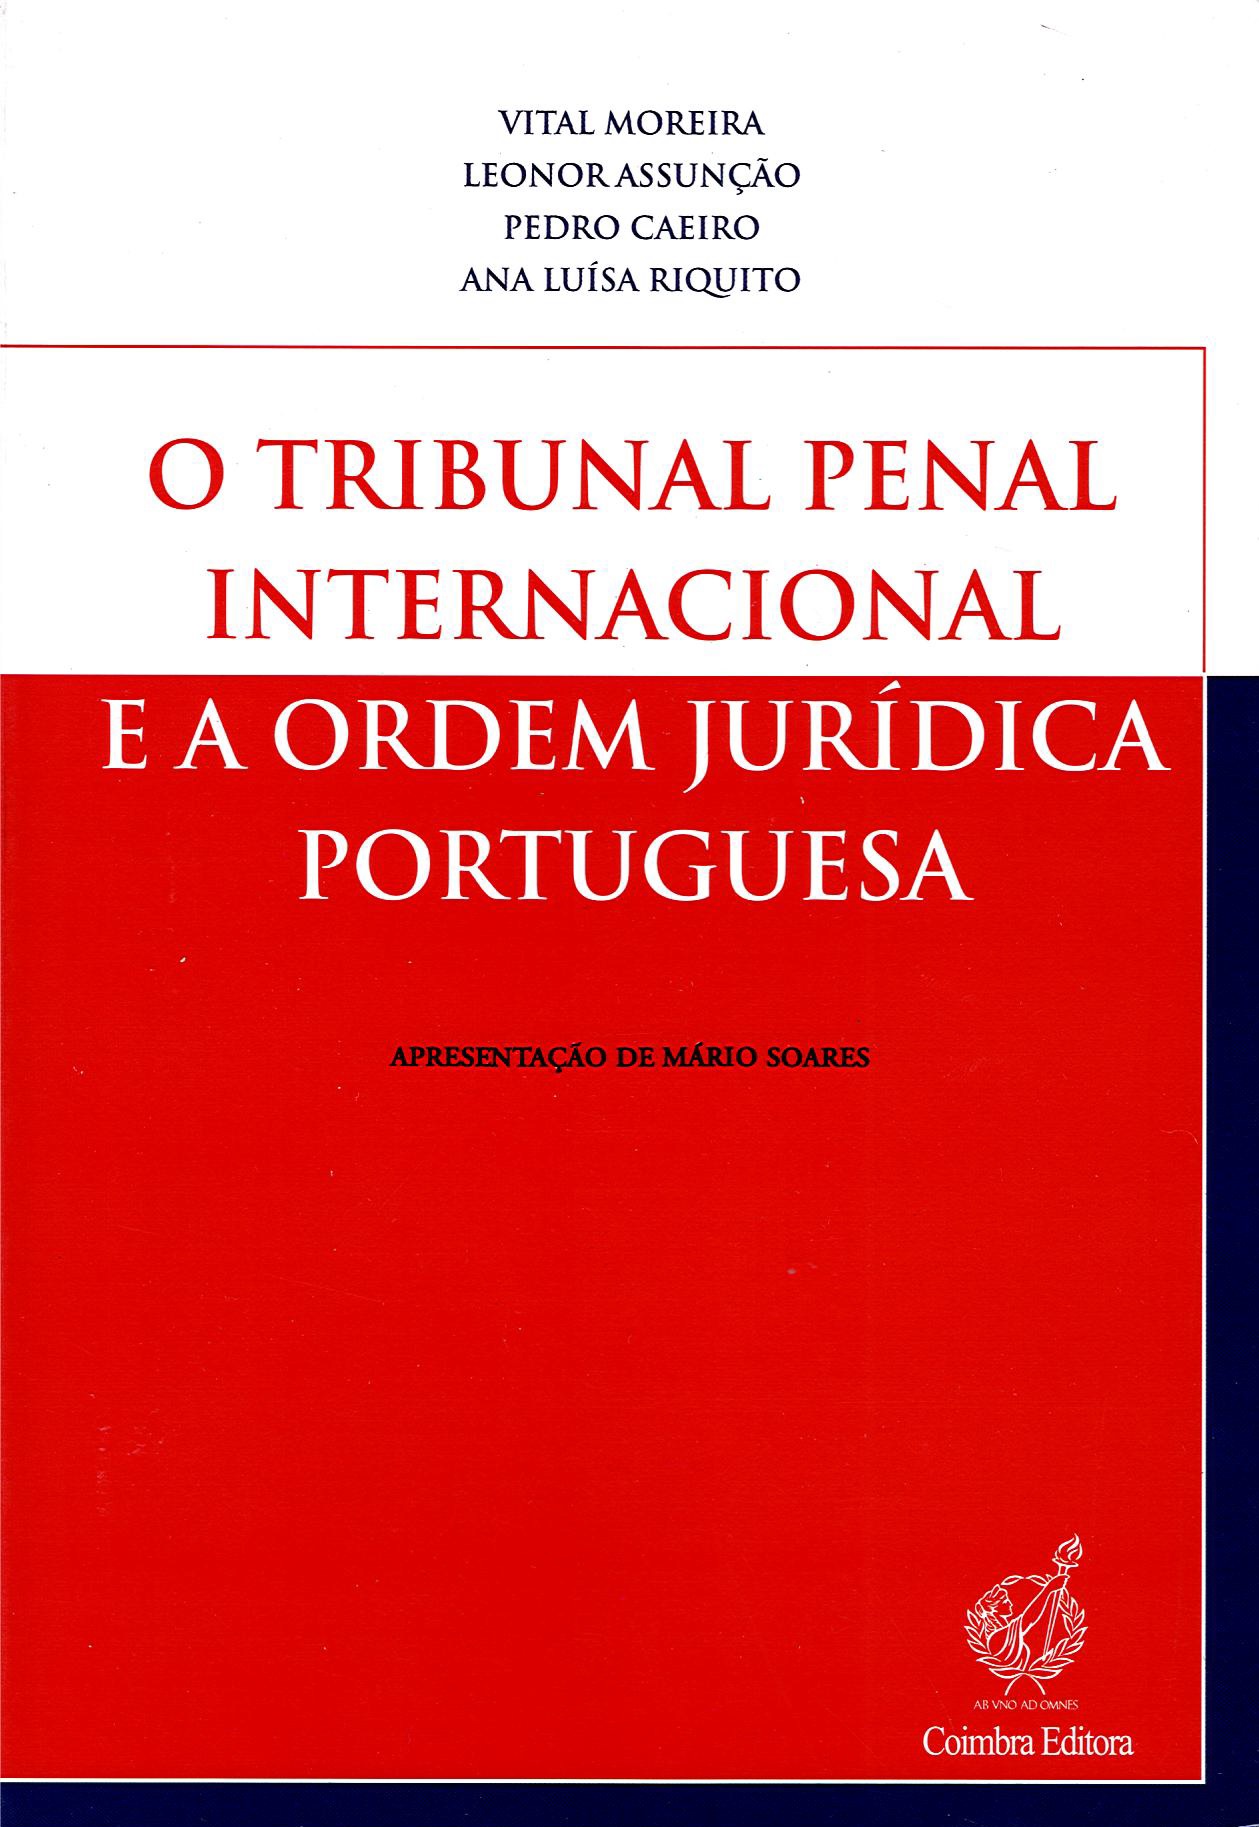 O Tribunal Penal Internacional e a Ordem Jurídica Portuguesa (2004)